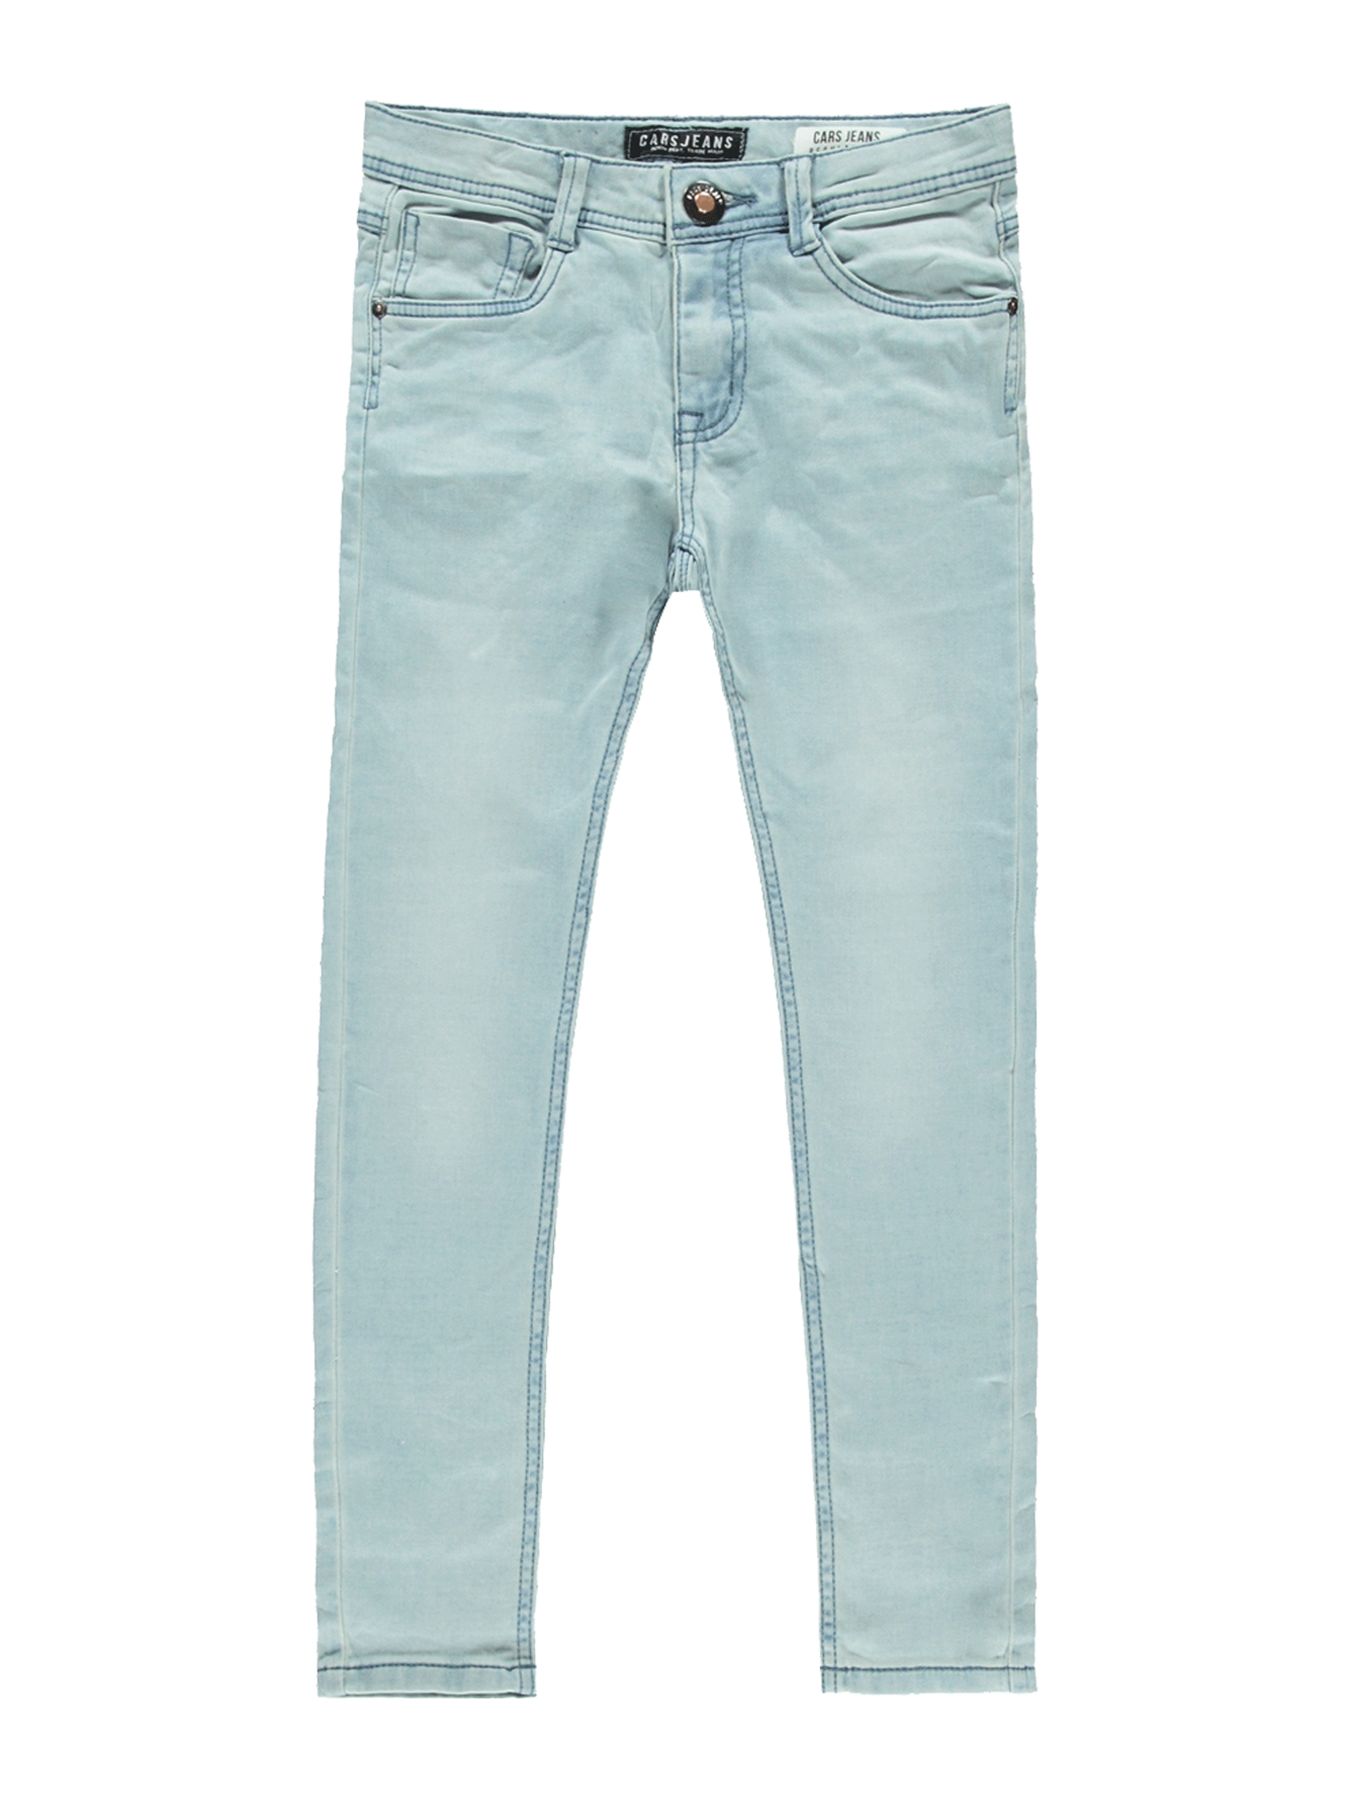 Cars jeans Jeans Prinze Jr. Regular fit 05 stone bleached 00103841-EKA26008400000013